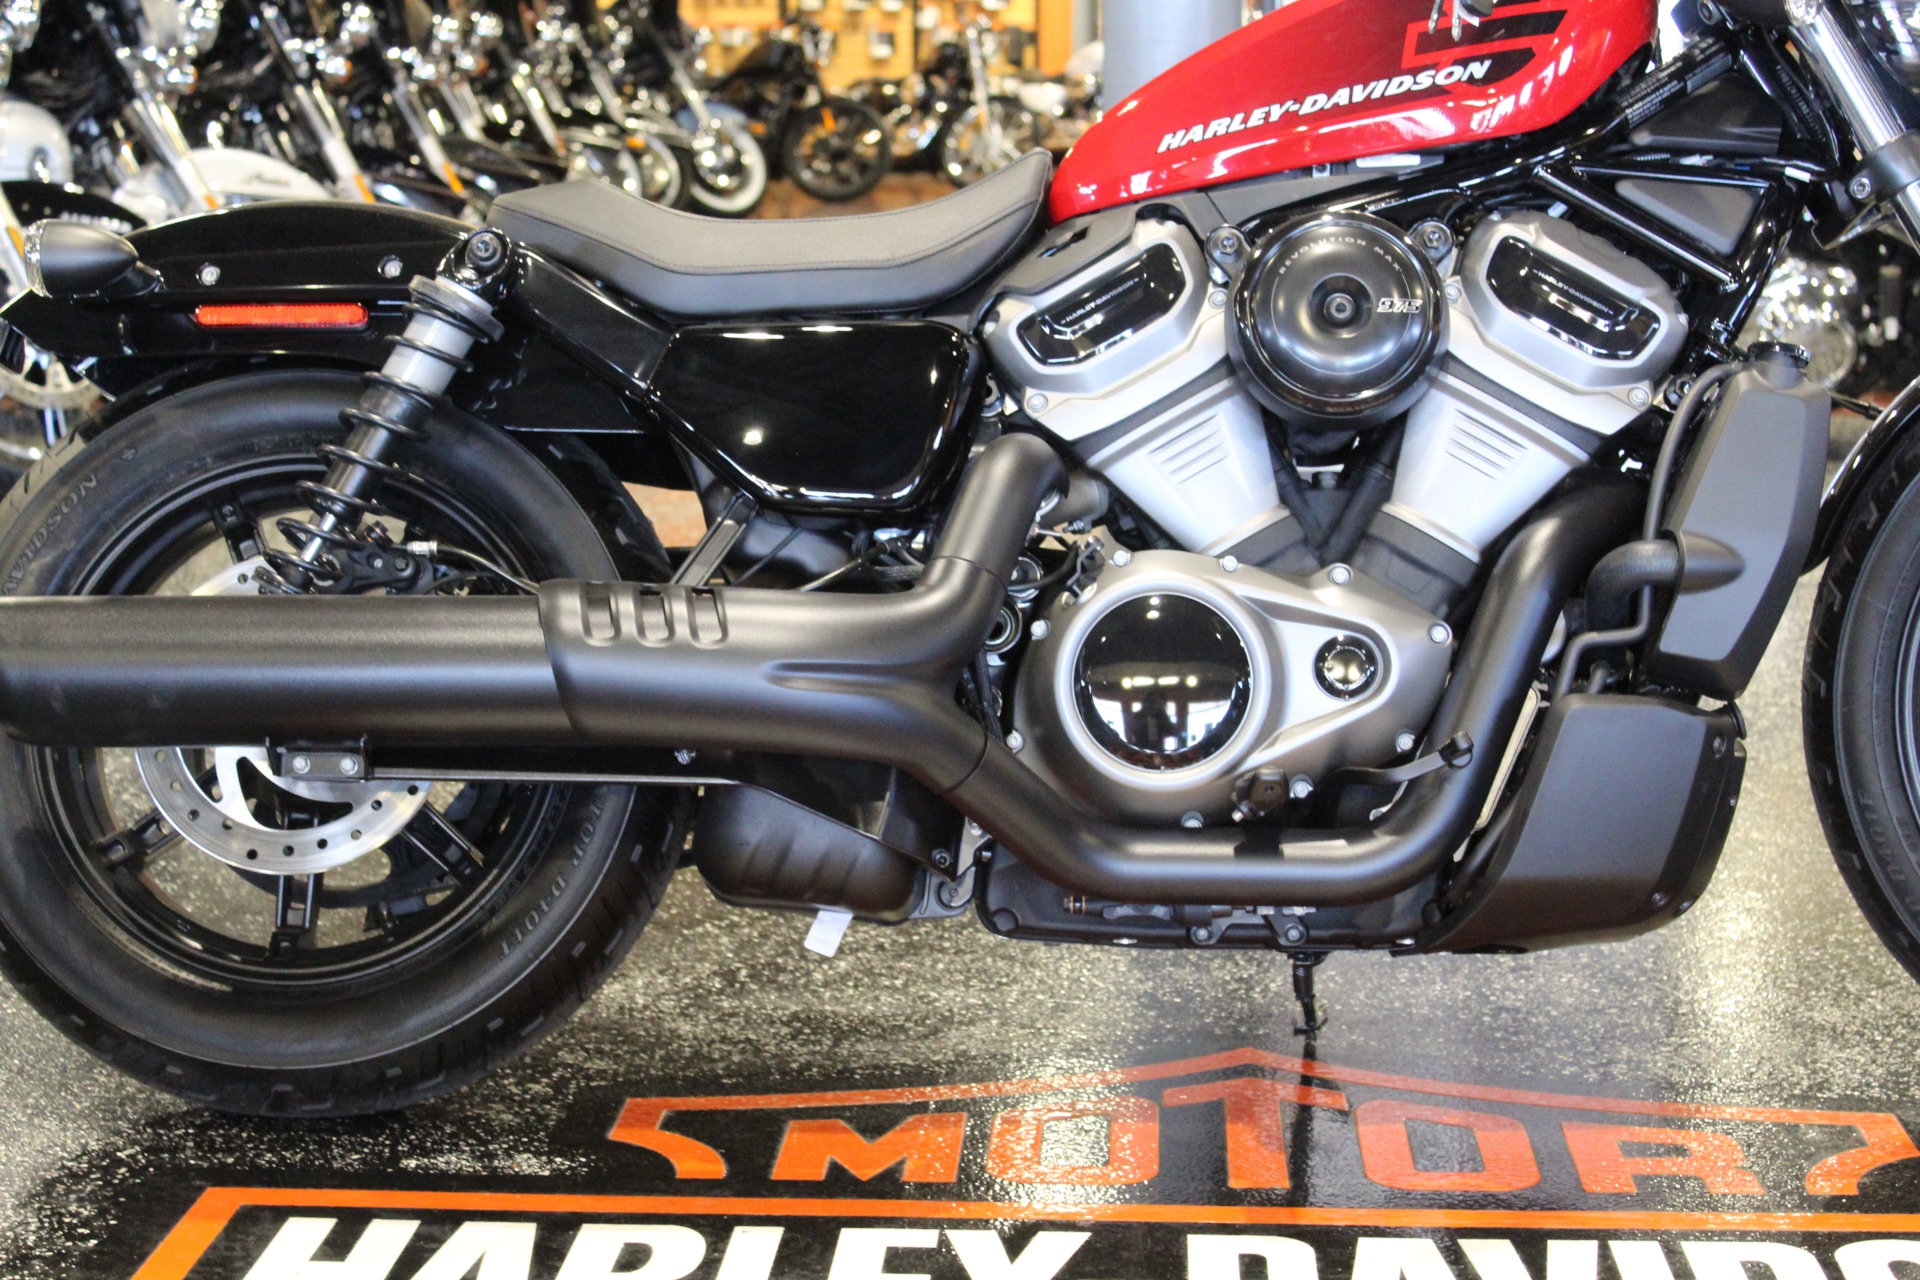 2022 Harley-Davidson Nightster™ in Mount Vernon, Illinois - Photo 2